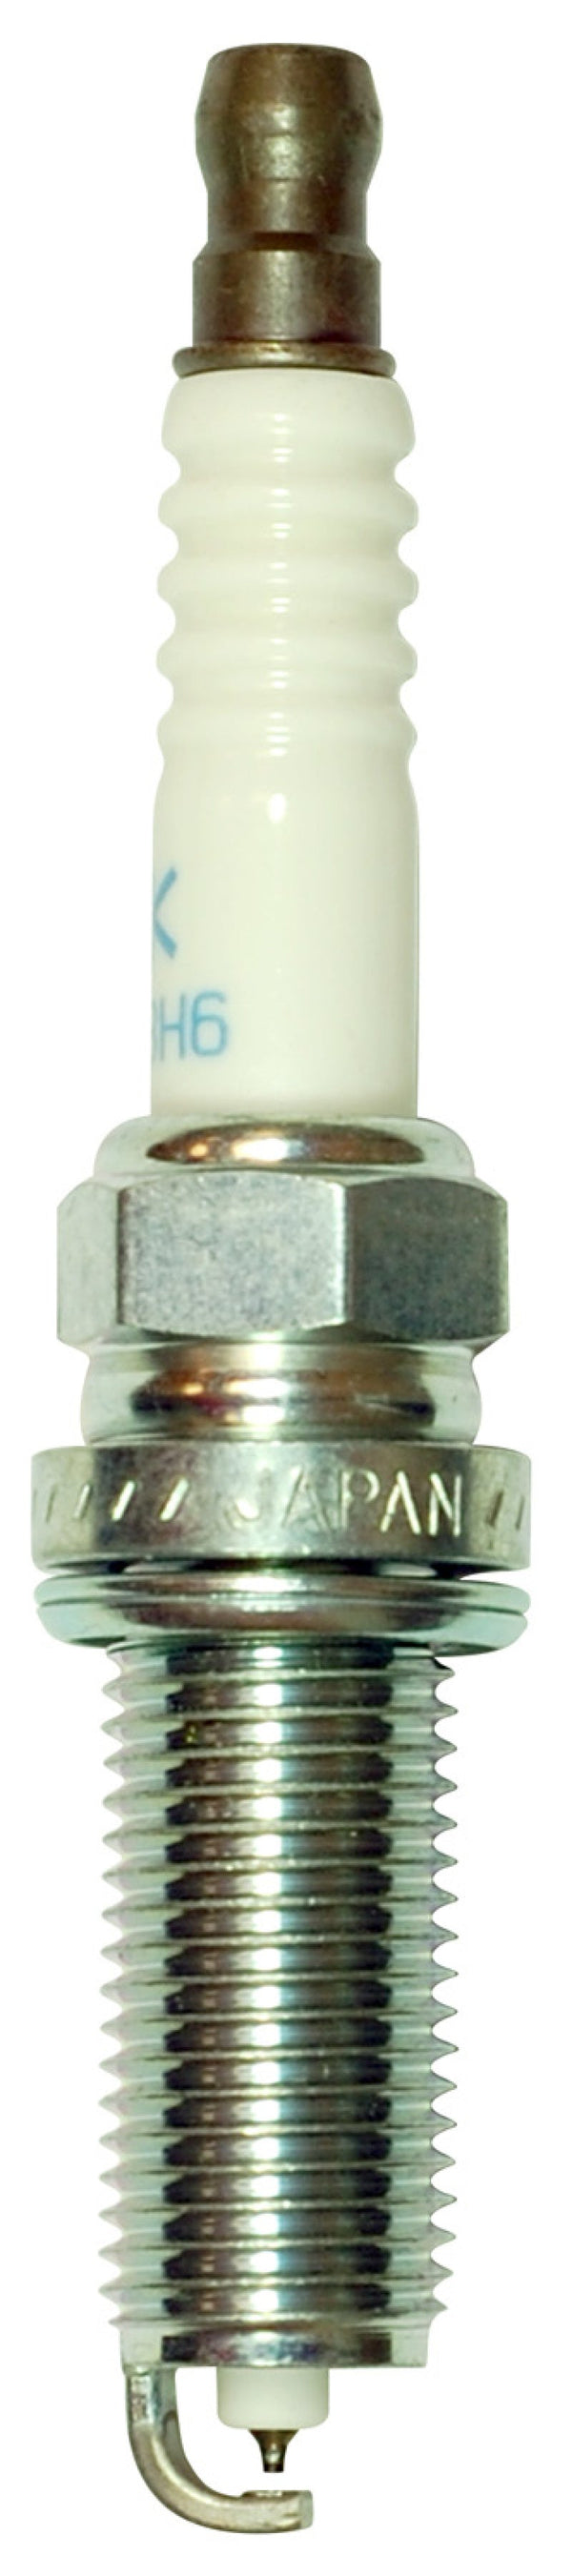 NGK Laser Iridium Spark Plug Box of 4 (ILKAR8H6) - Premium Spark Plugs from NGK - Just 206.33 SR! Shop now at Motors